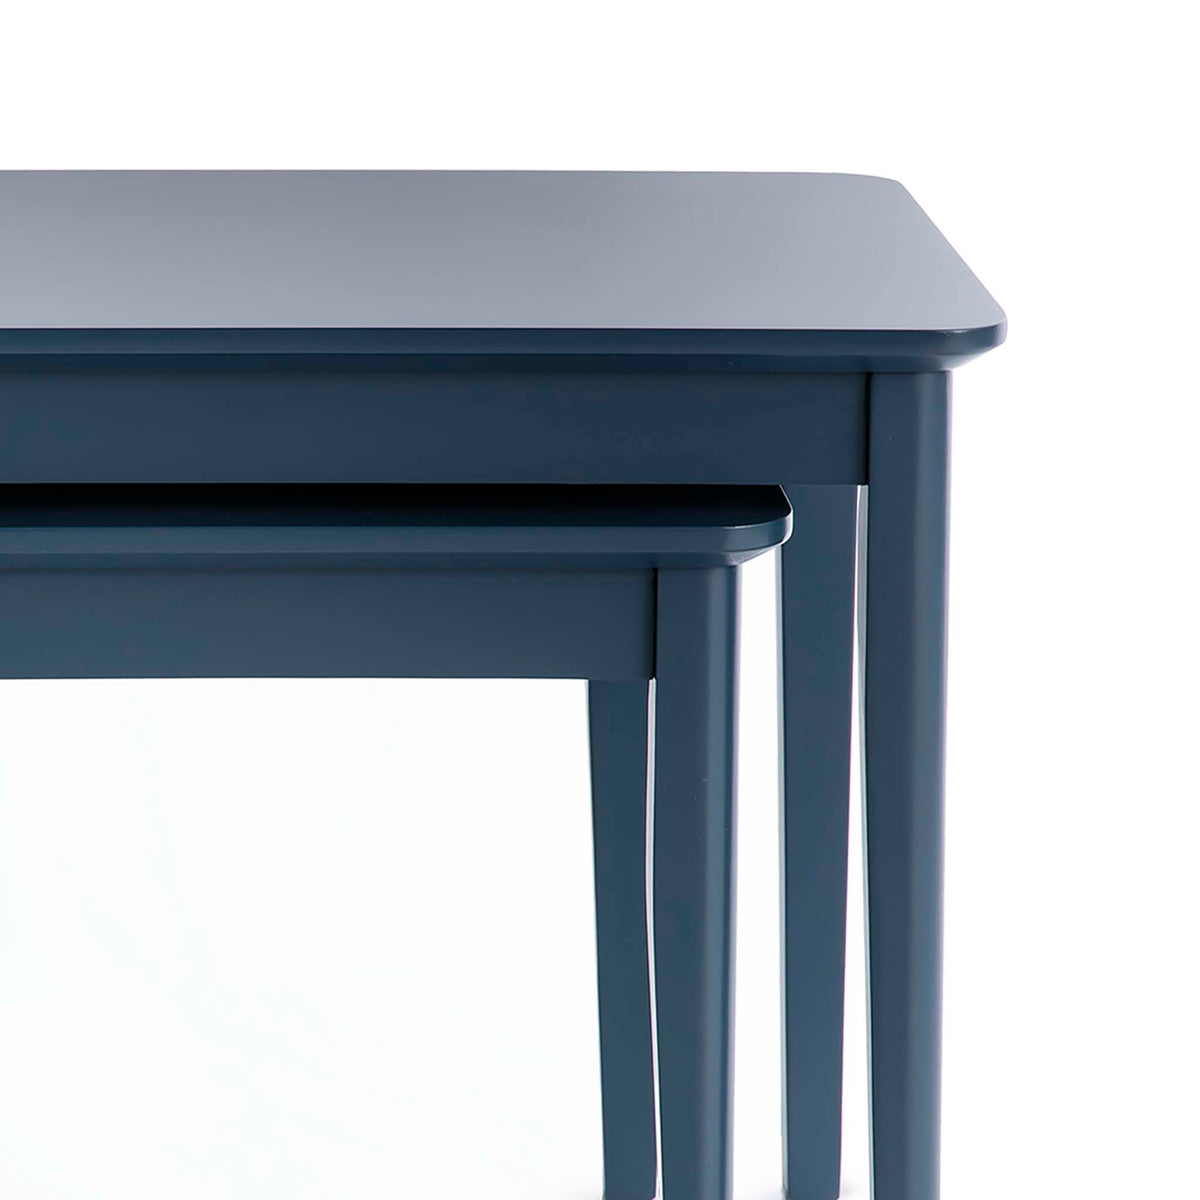 Stirling Blue Nest of Tables - Top corner of nested tables